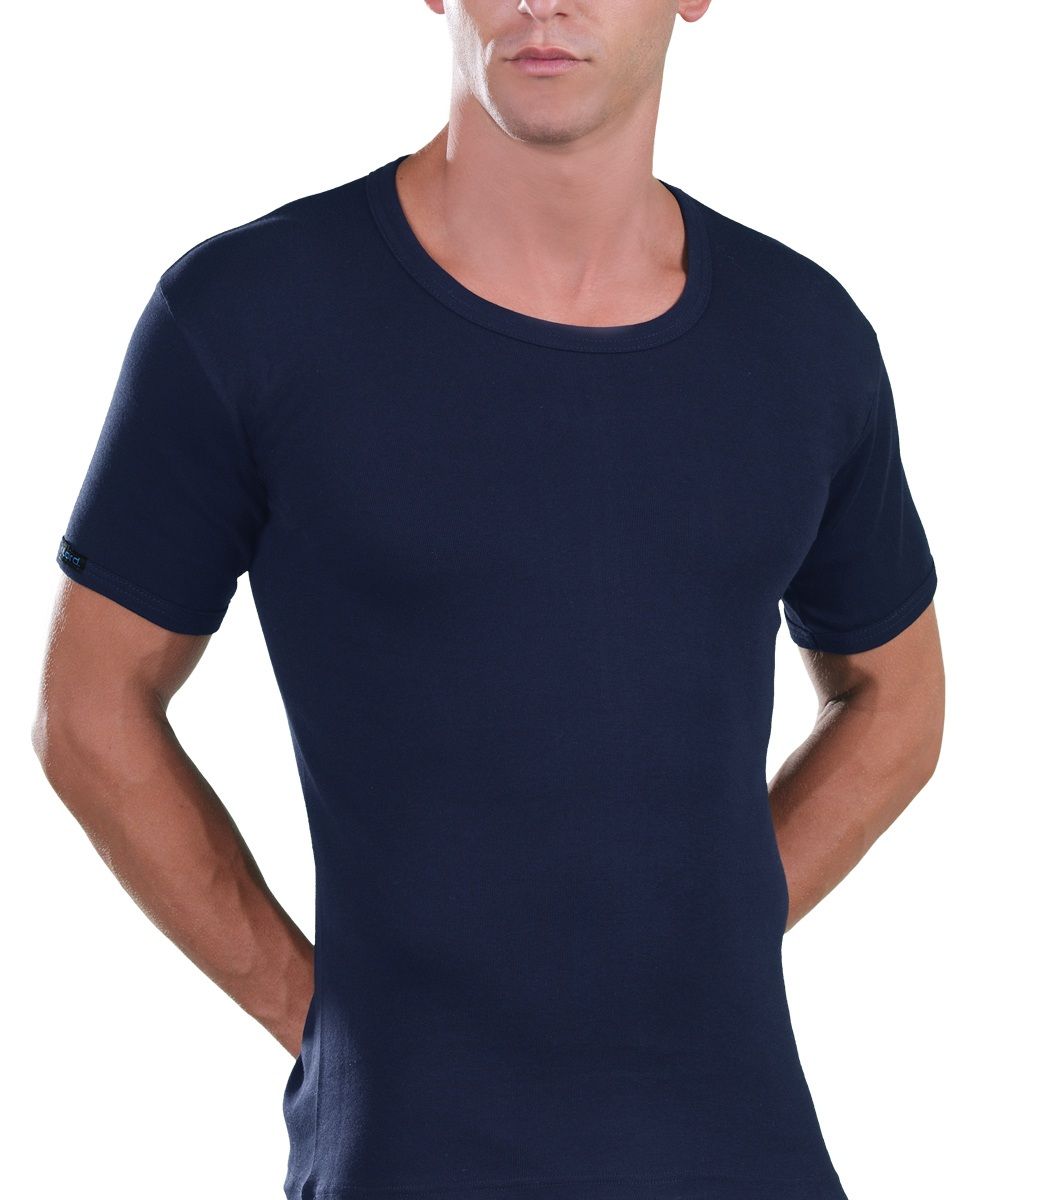 Open Neck T-Shirt, xlarge size, blue